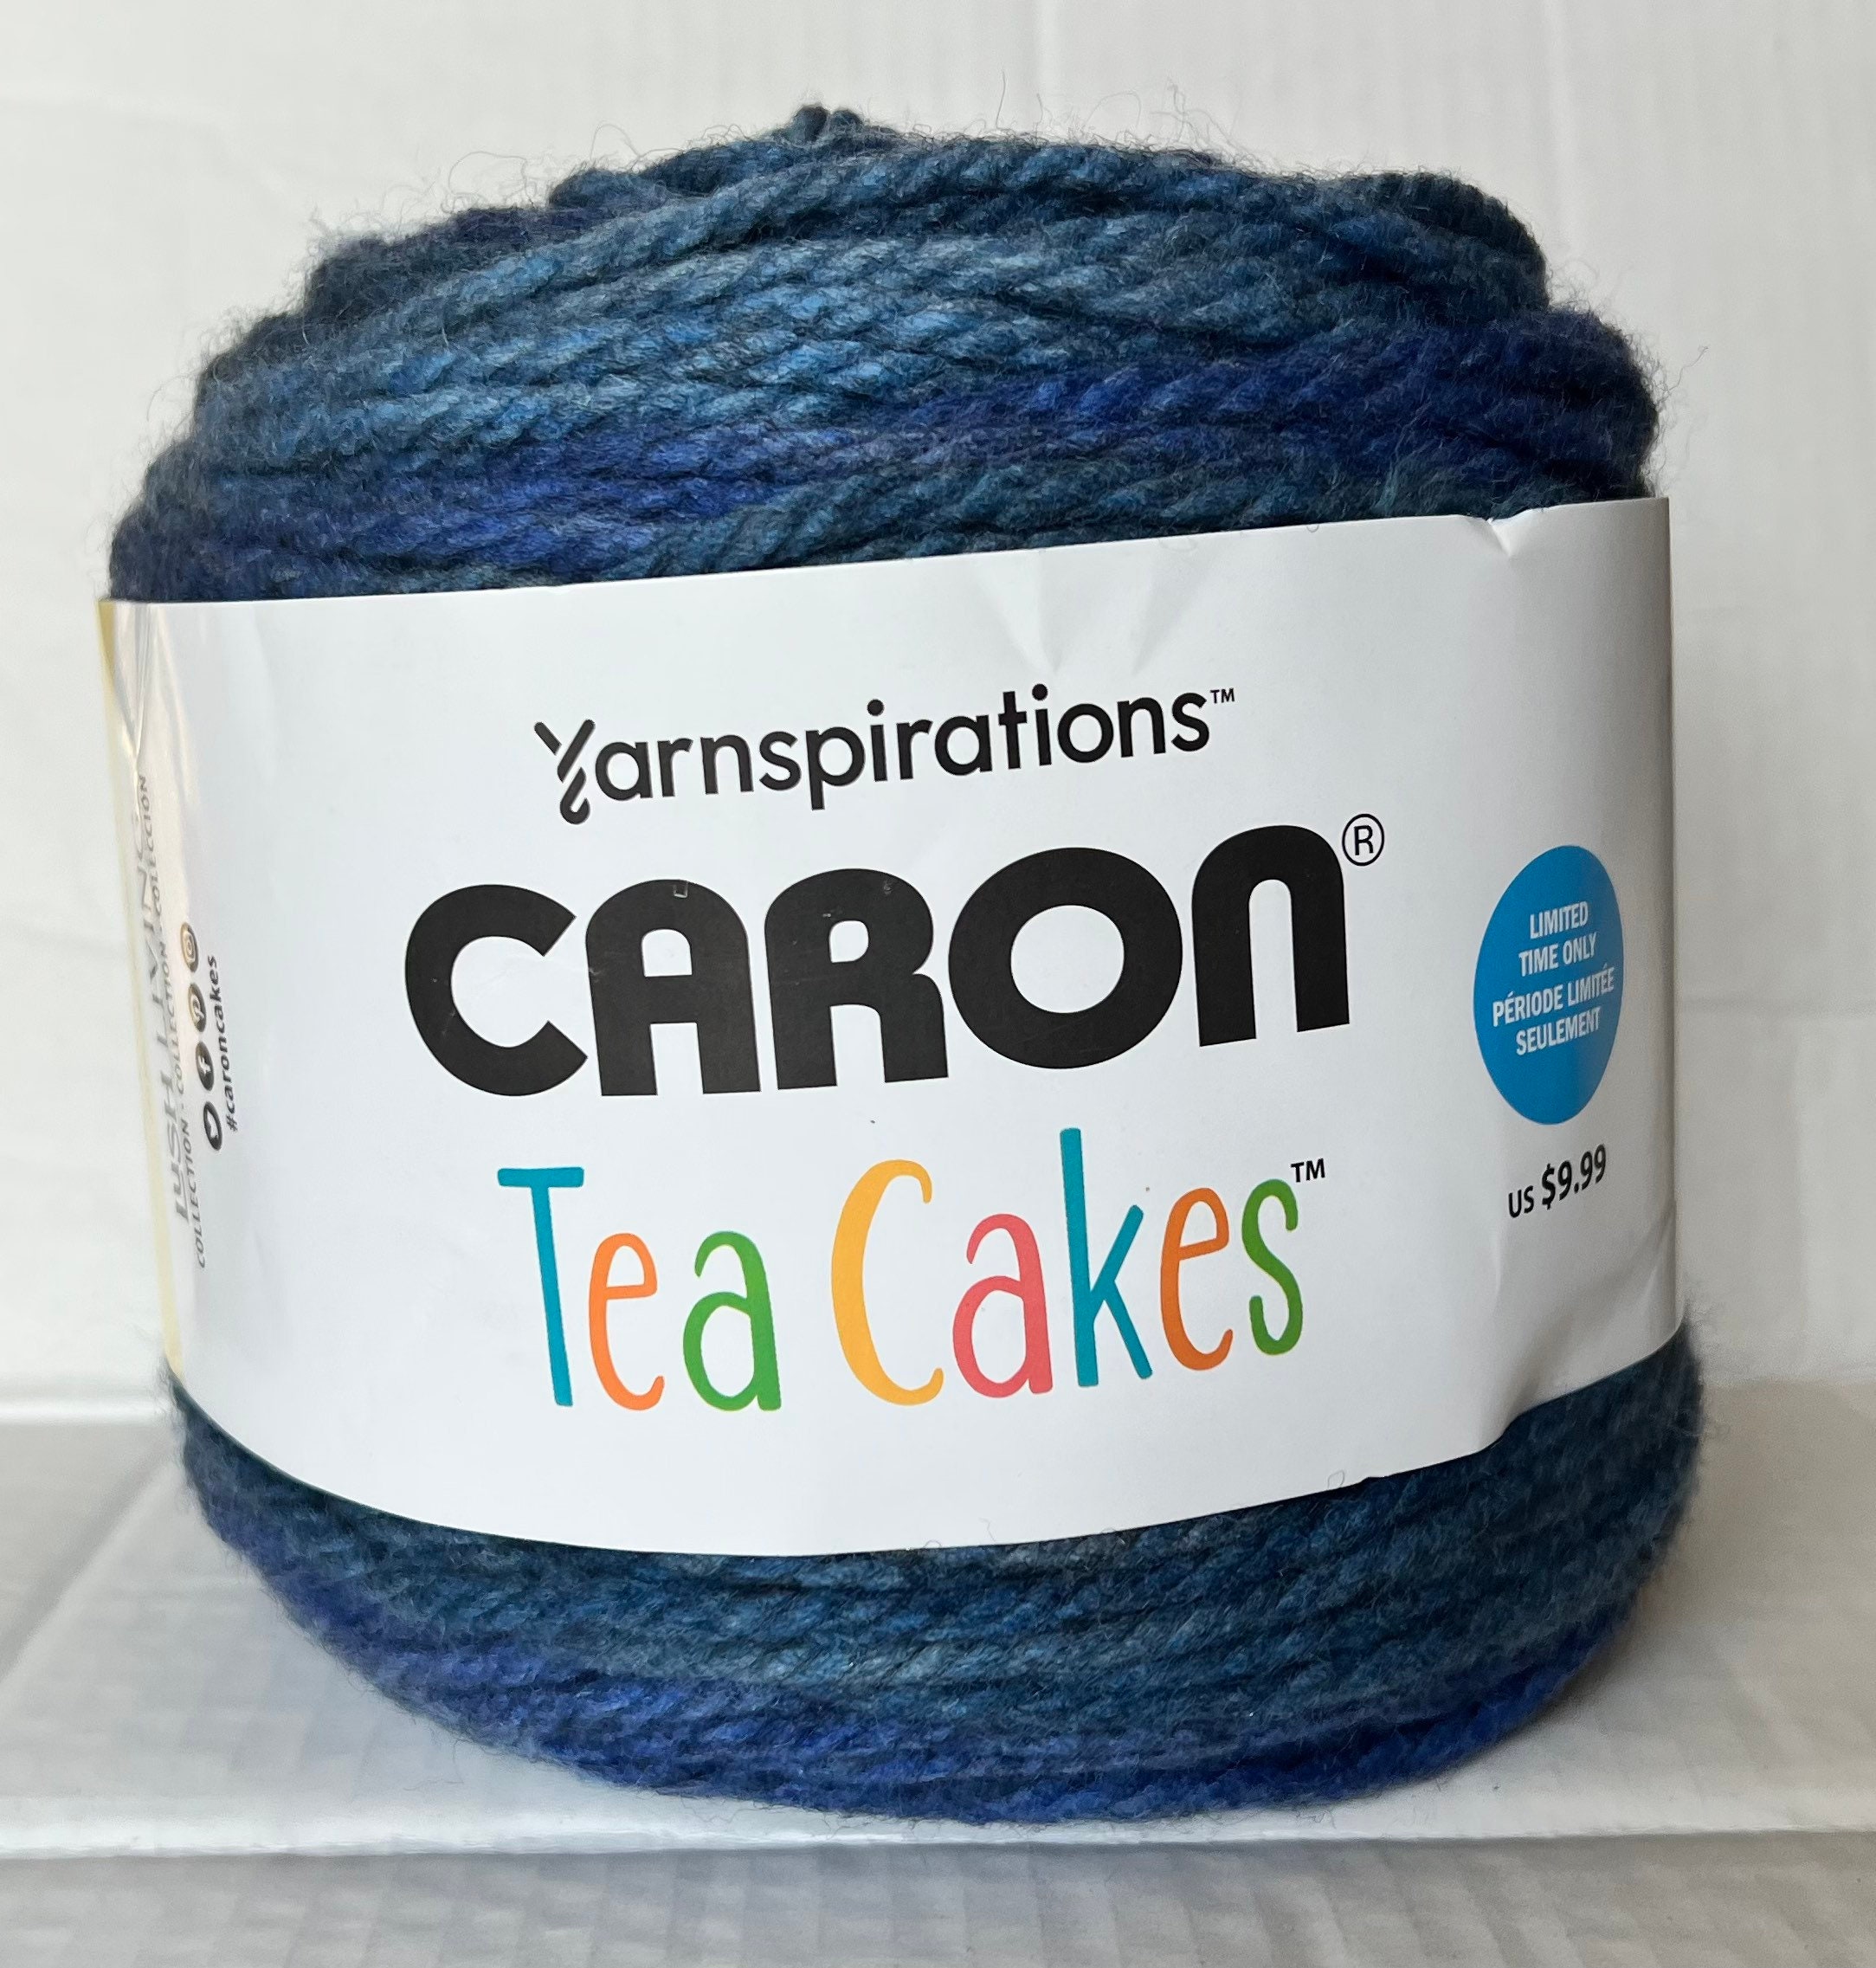 Yarnspirations Caron Cakes Yarn- Berries & Cream-Blue, Sage Green